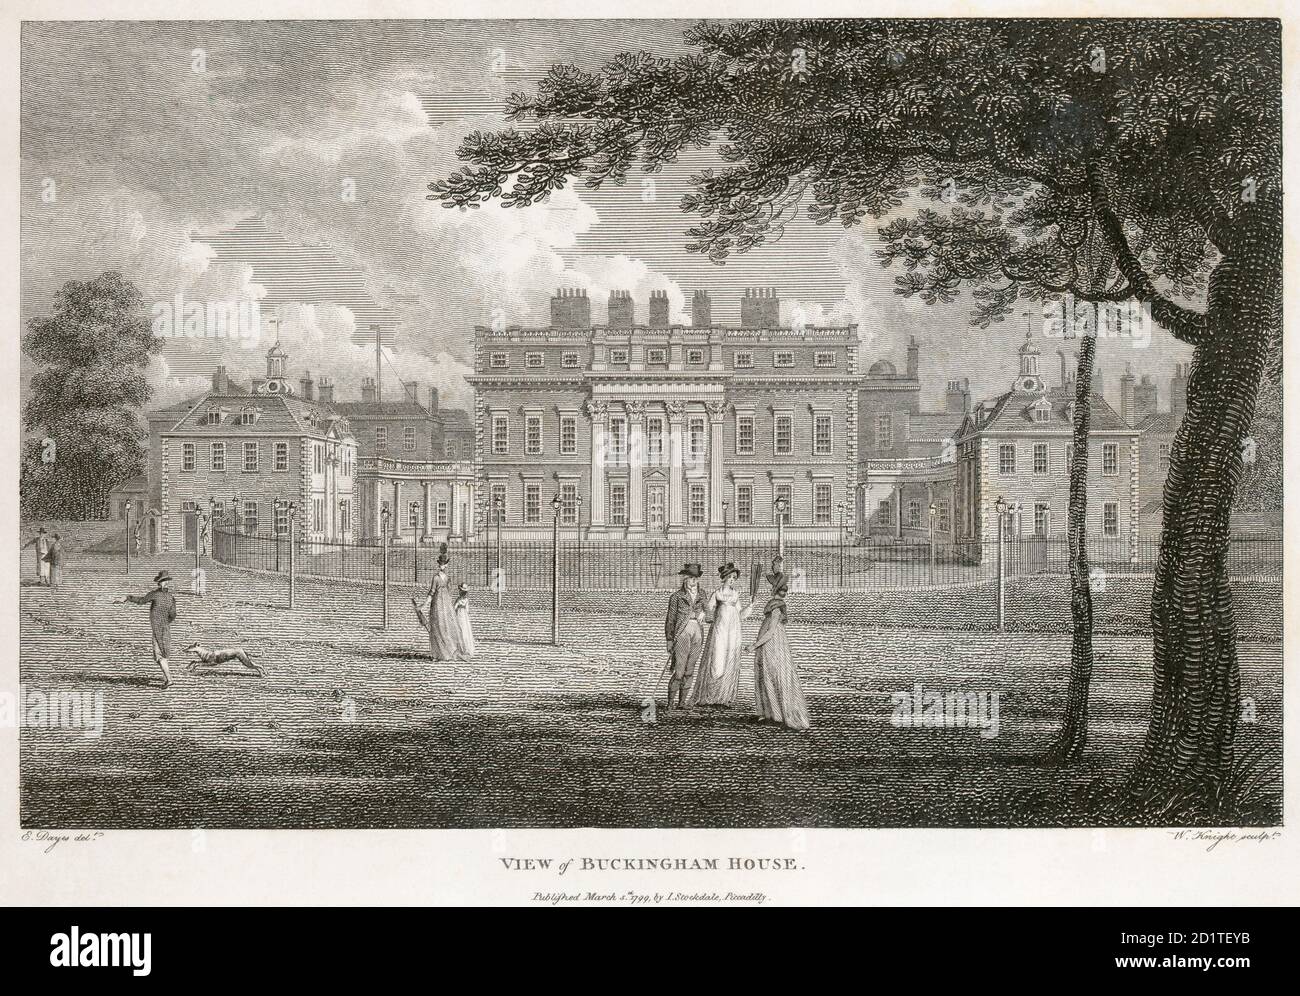 BUCKINGHAM PALACE, Buckingham Palace Road, City of Westminster, London. 'Blick auf Buckingham House' datiert 1799. W Knight Sculp. Liniengravur aus der Sammlung Mayson Beeton. Stockfoto